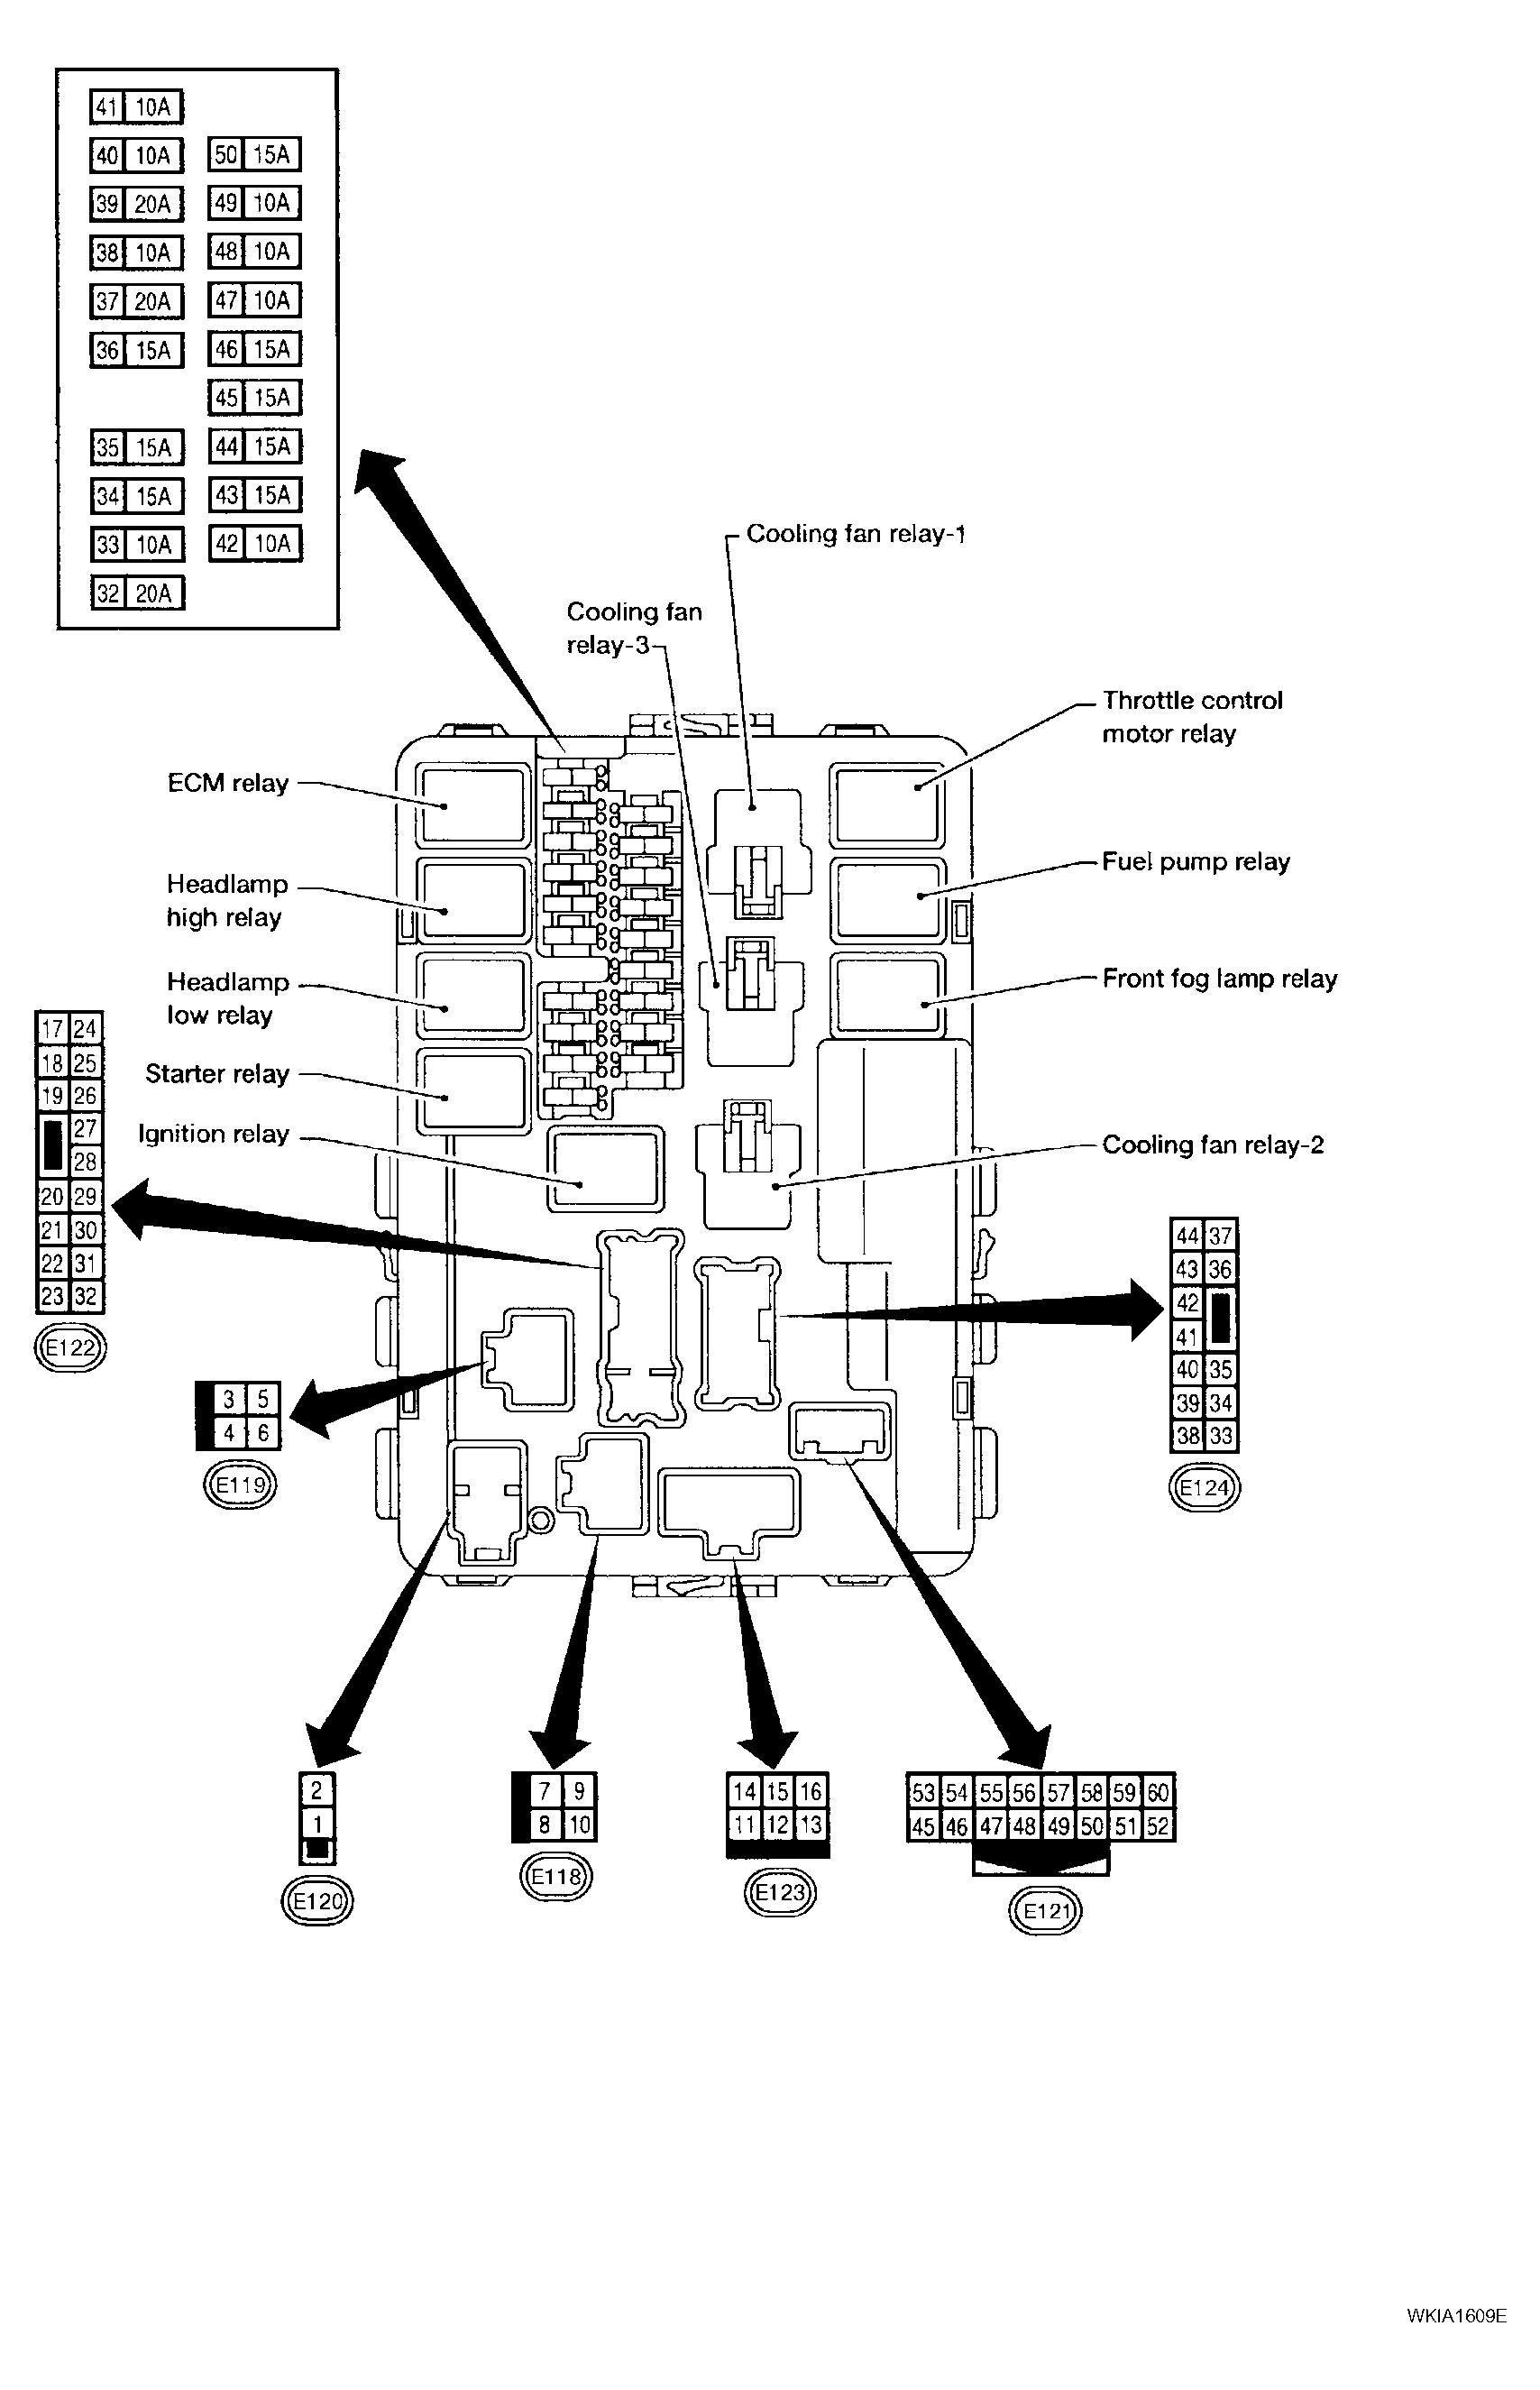 2002 Nissan Xterra Engine Diagram 2005 Nissan Altima 2 5 Engine Diagram Wiring Diagram Paper Of 2002 Nissan Xterra Engine Diagram